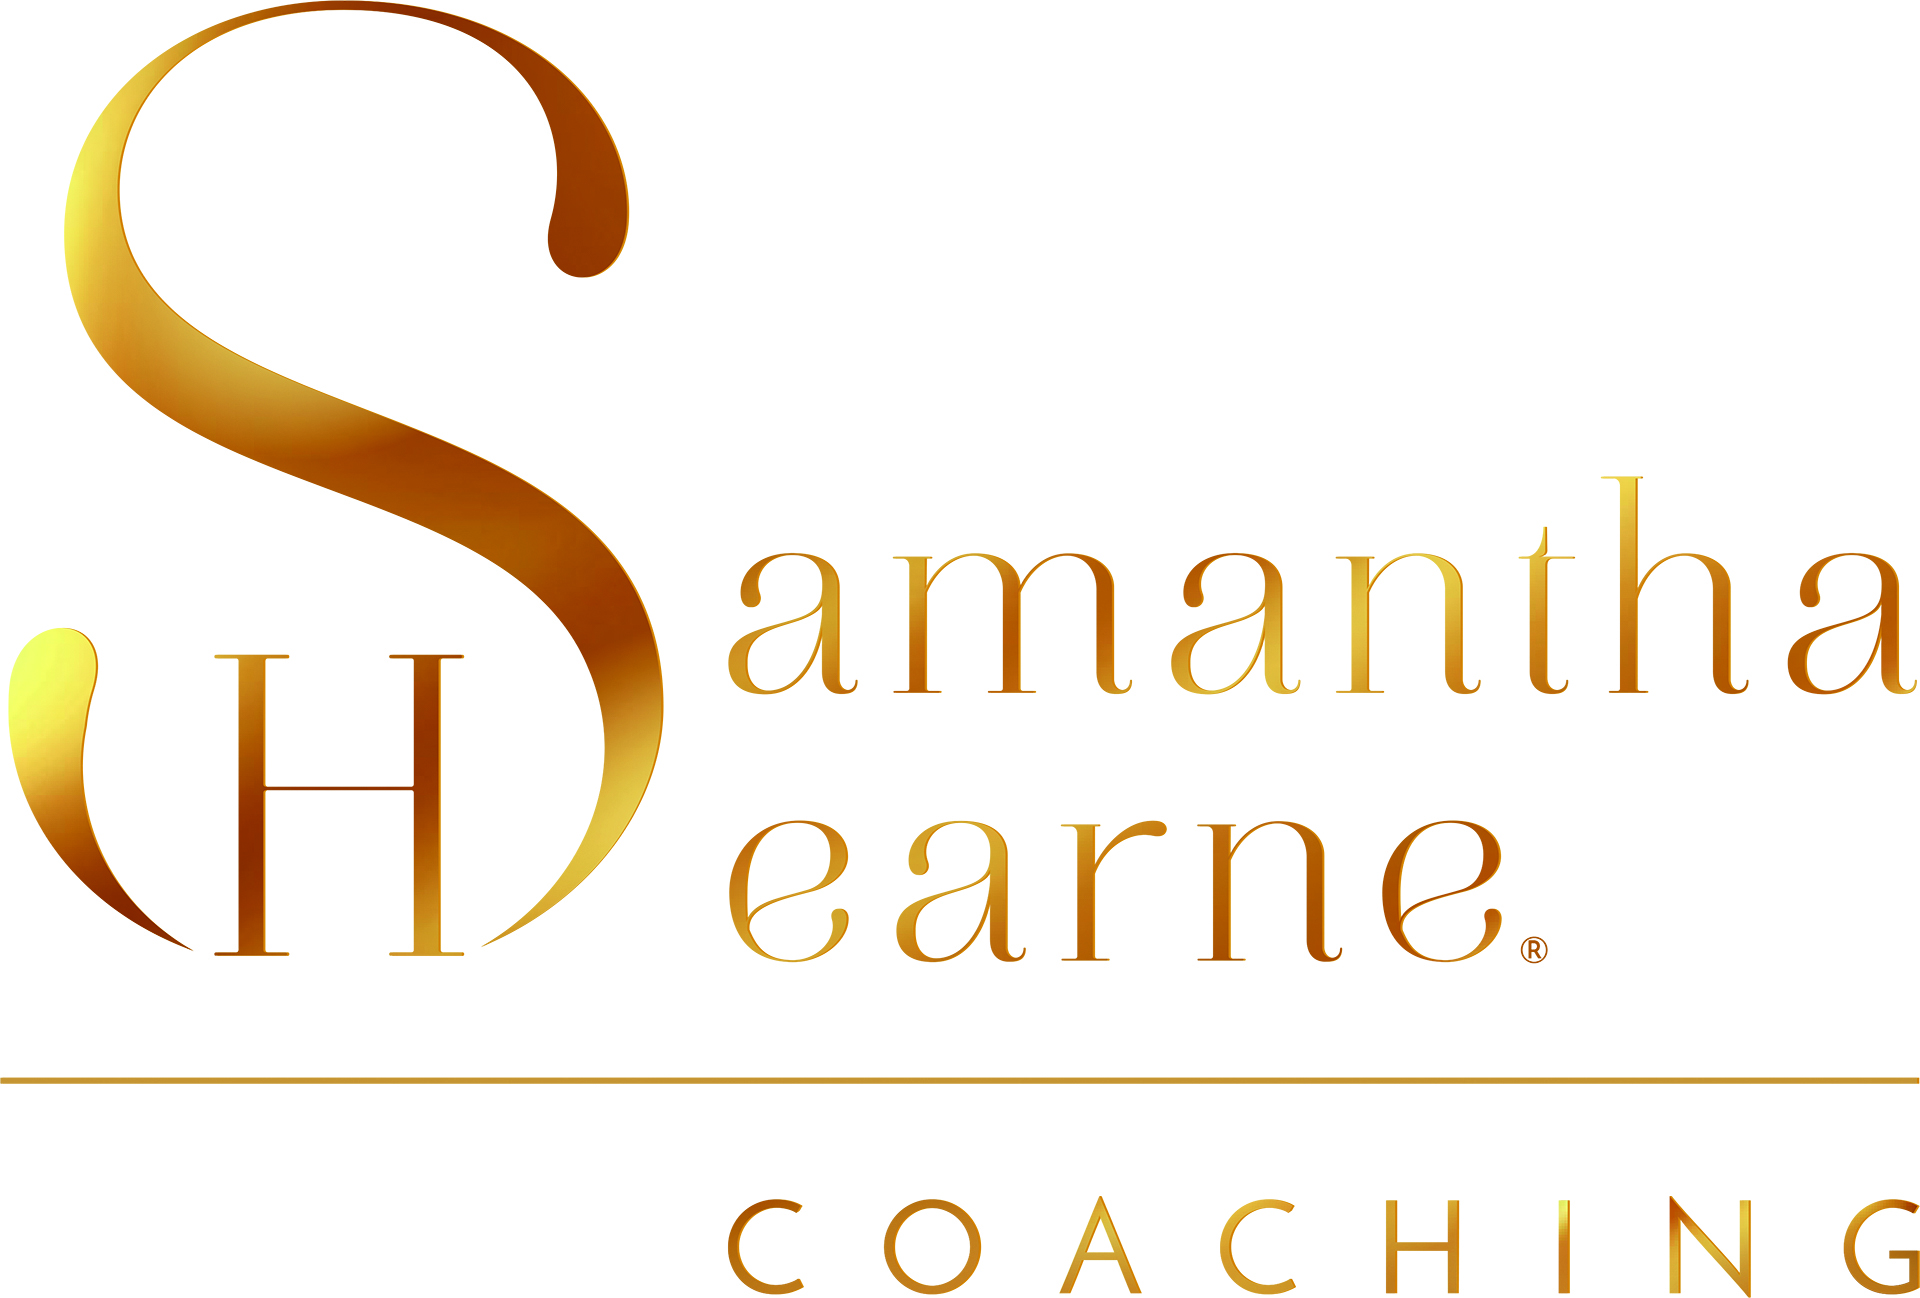 samantha hearne coaching